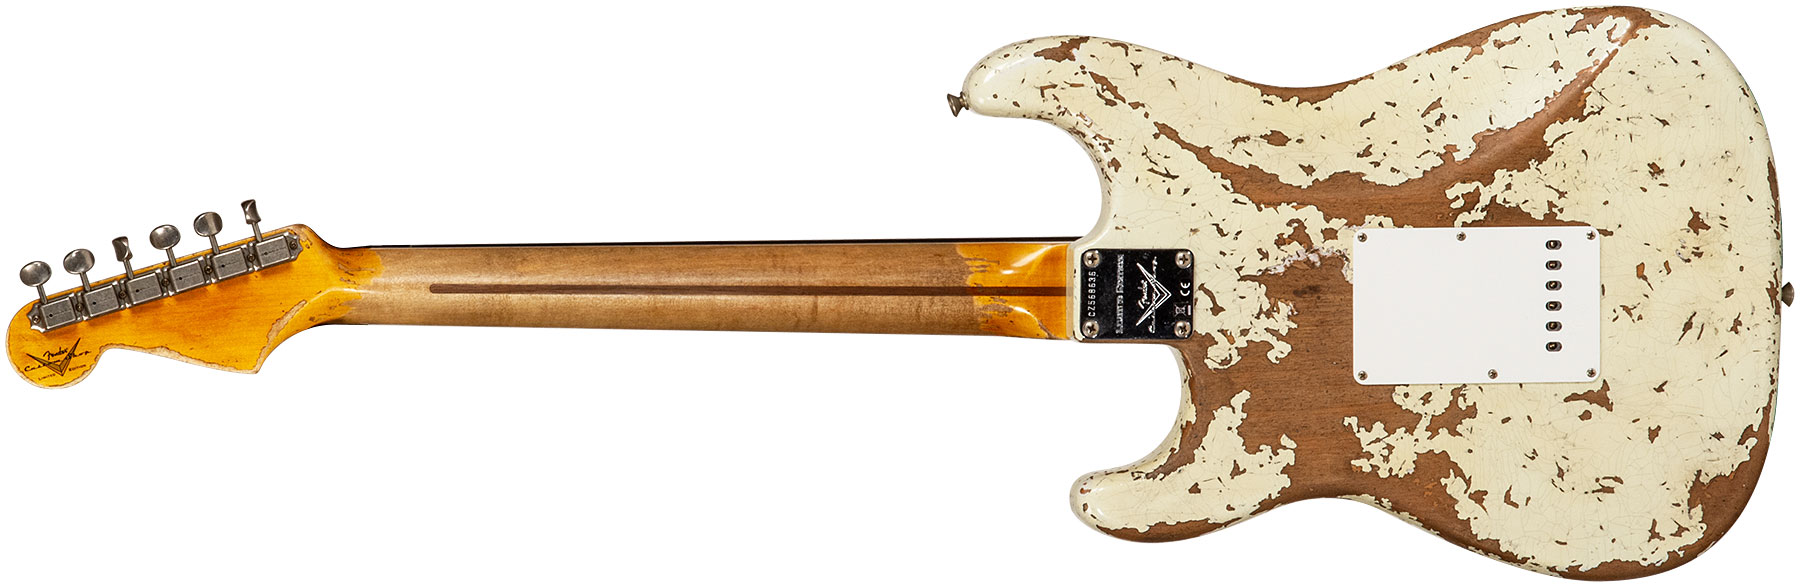 Fender Custom Shop Strat 1956 3s Trem Mn #cz568636 - Super Heavy Relic Aged India Ivory - E-Gitarre in Str-Form - Variation 1